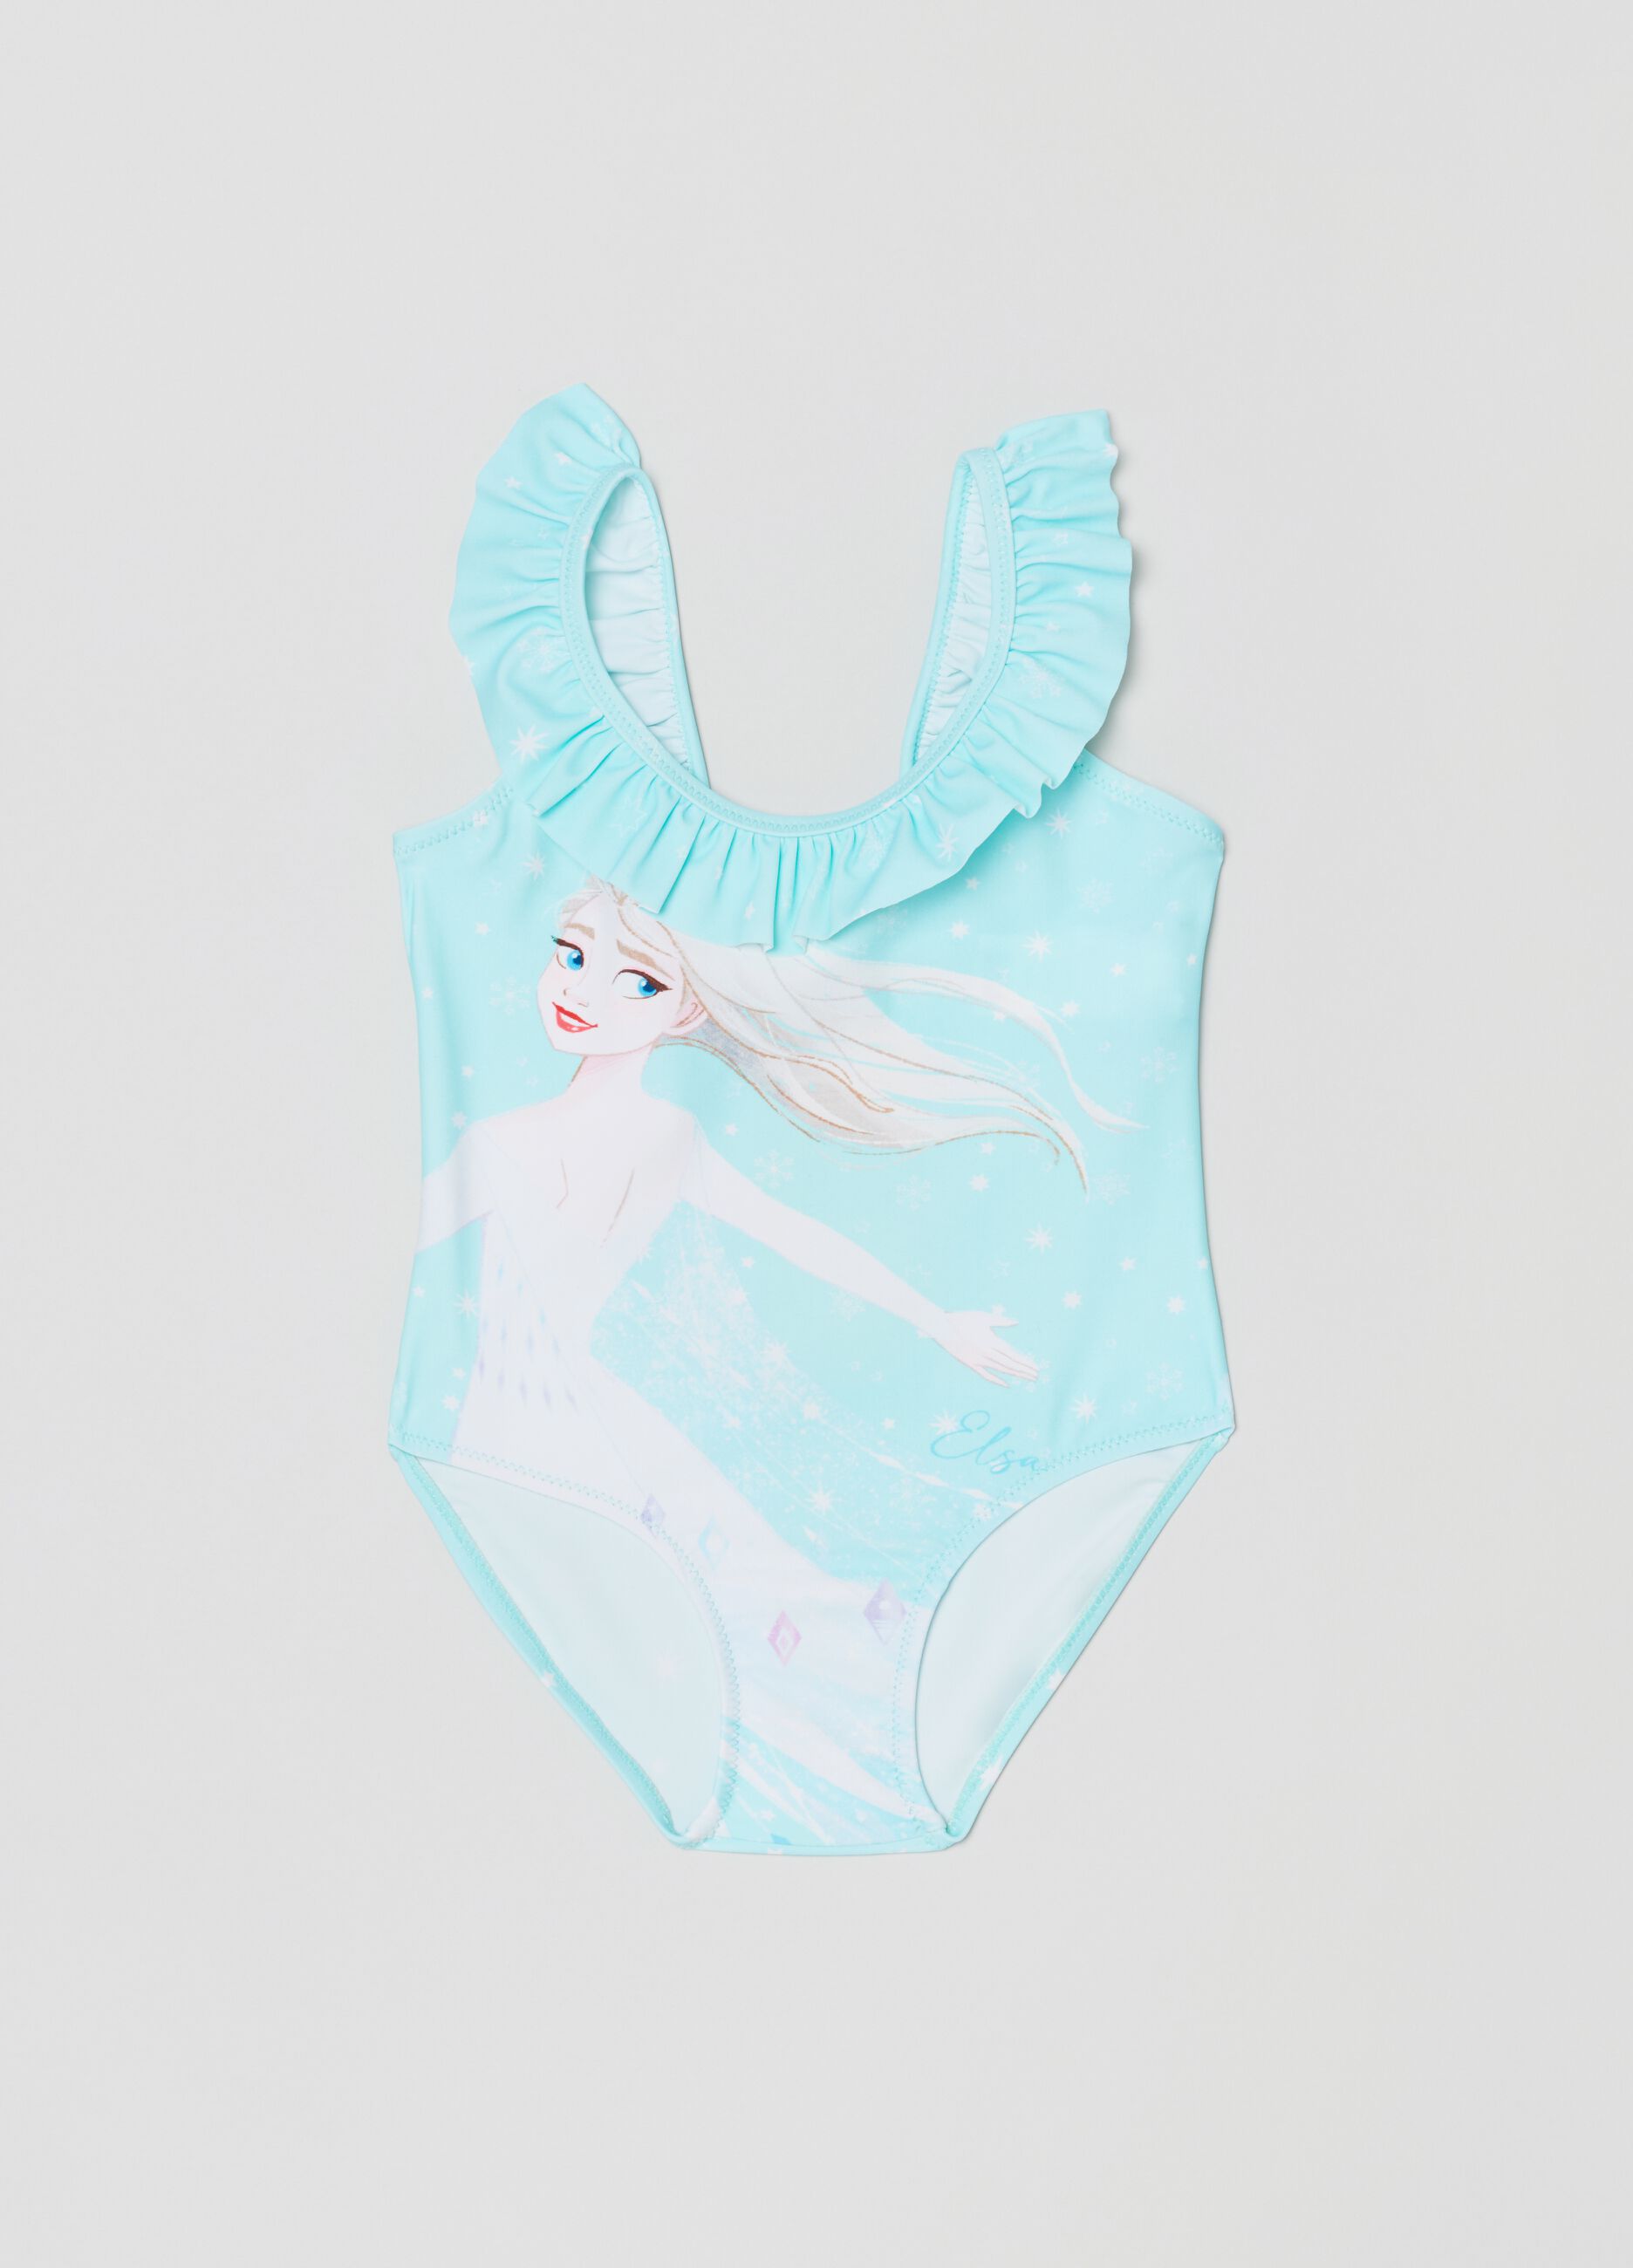 Disney Frozen one-piece swimsuit